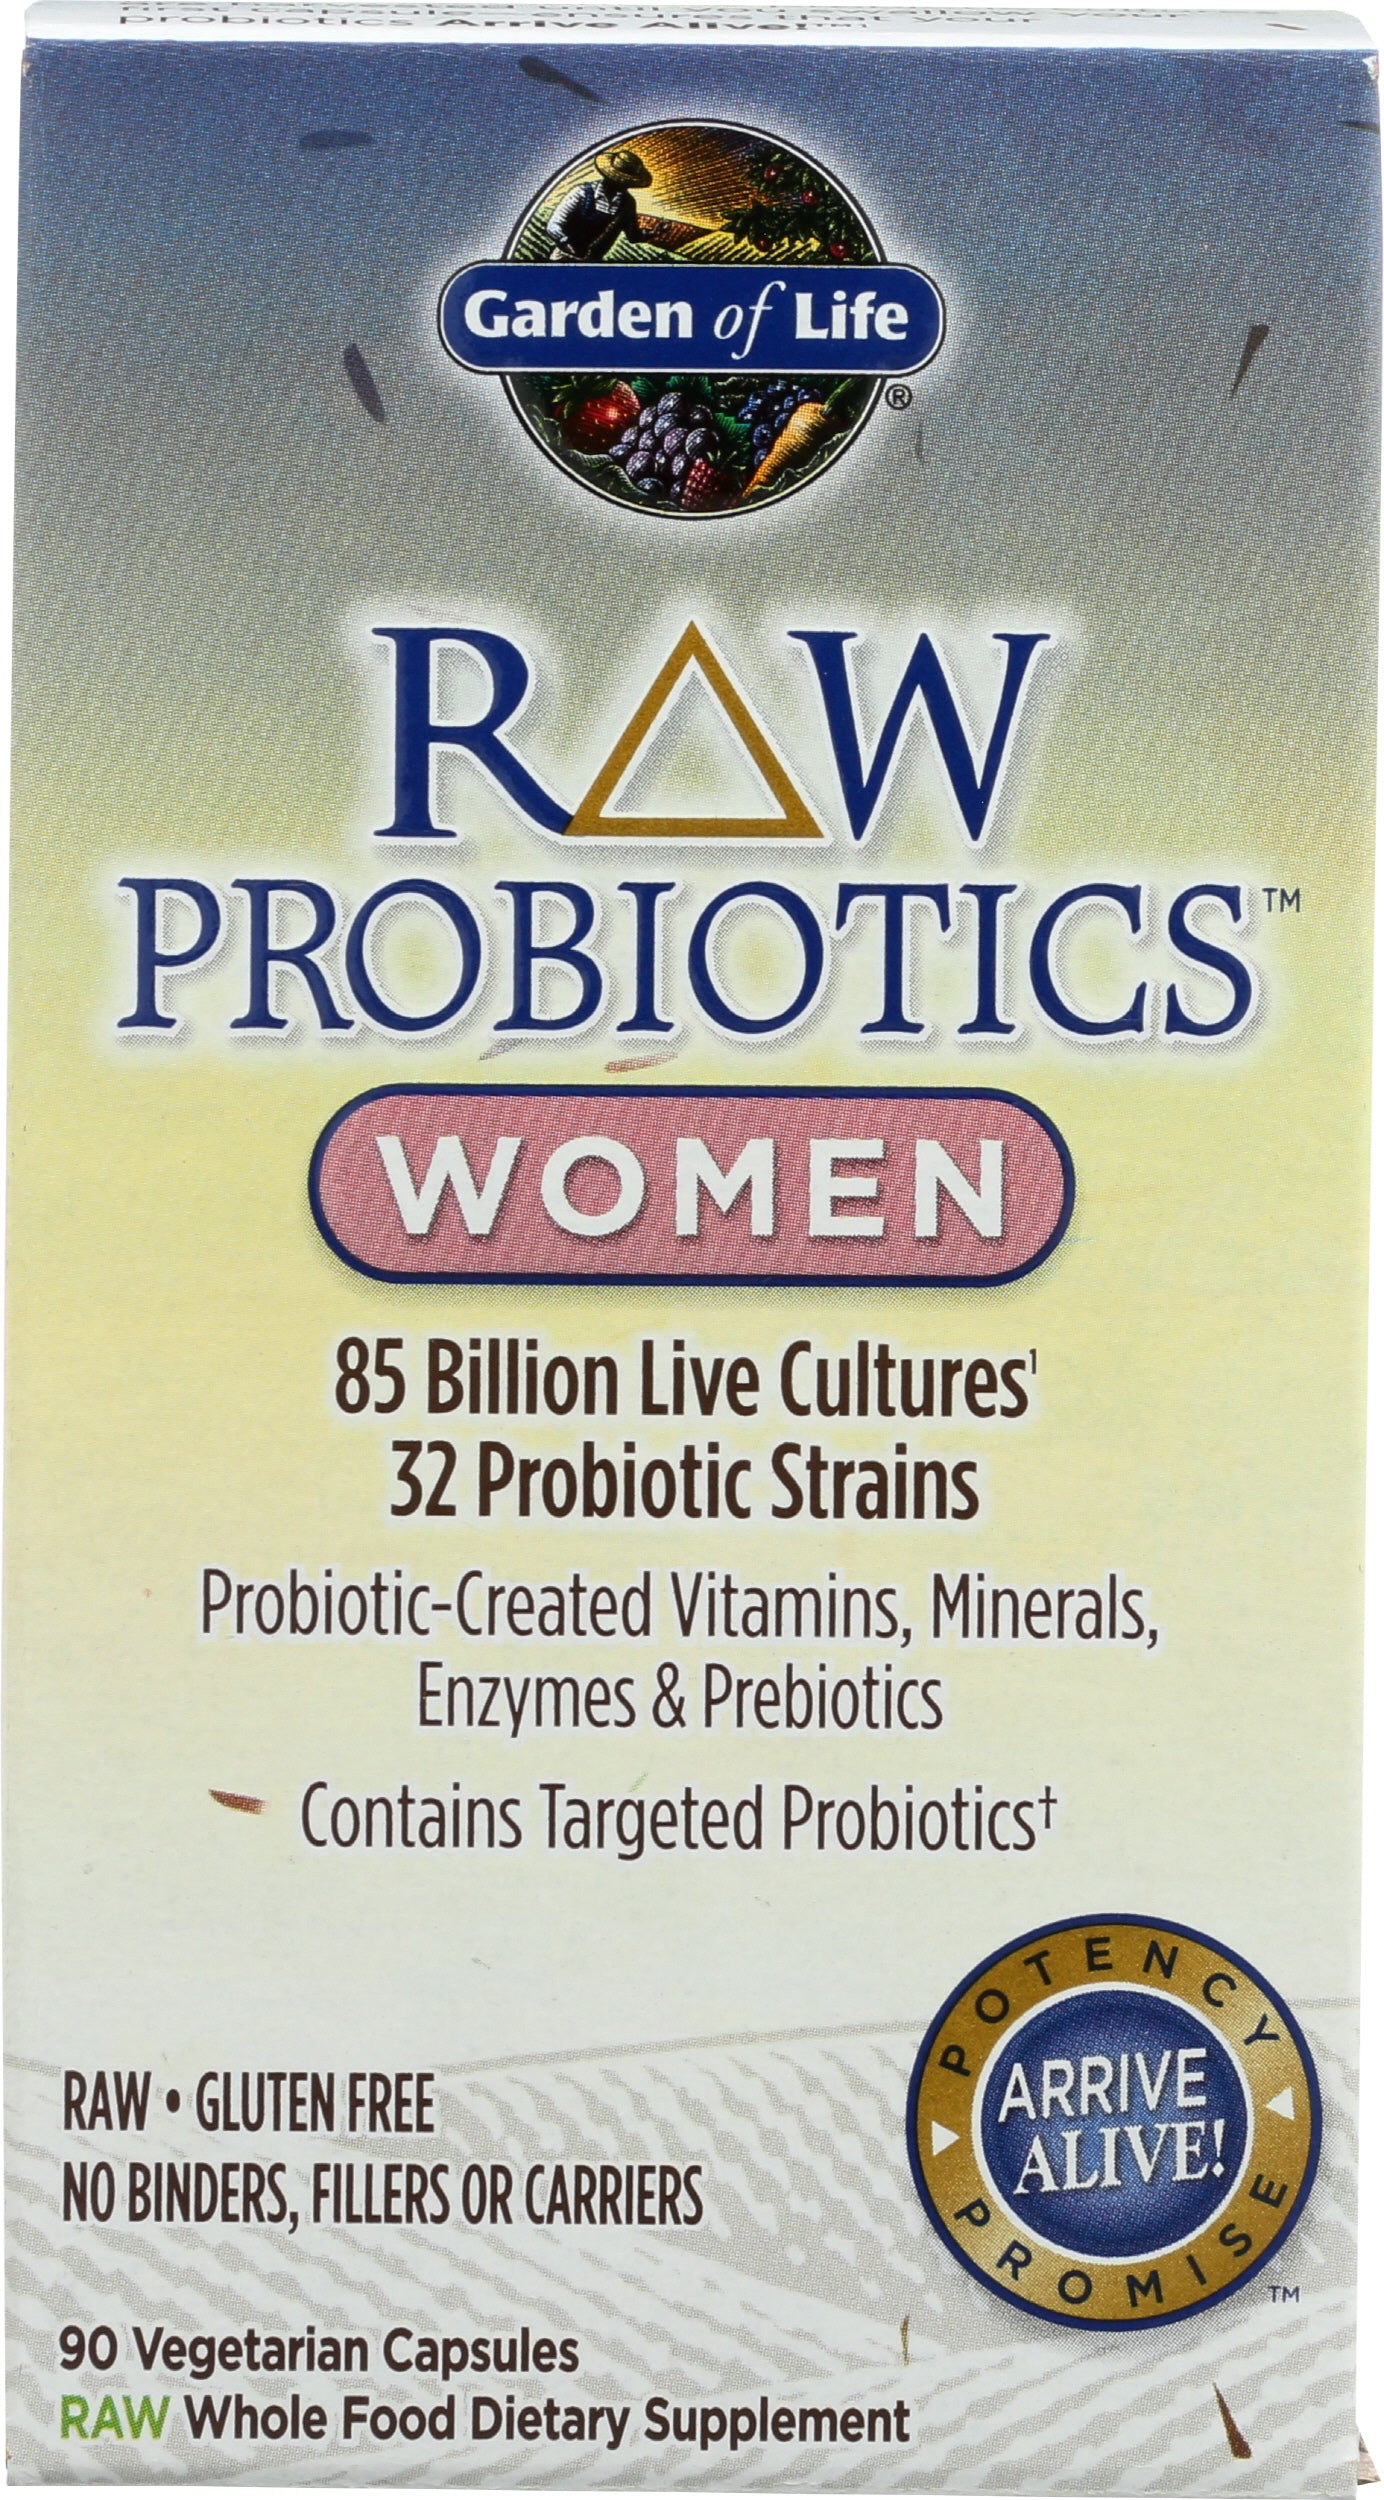 Garden of Life Raw Probiotics Women Front of Box